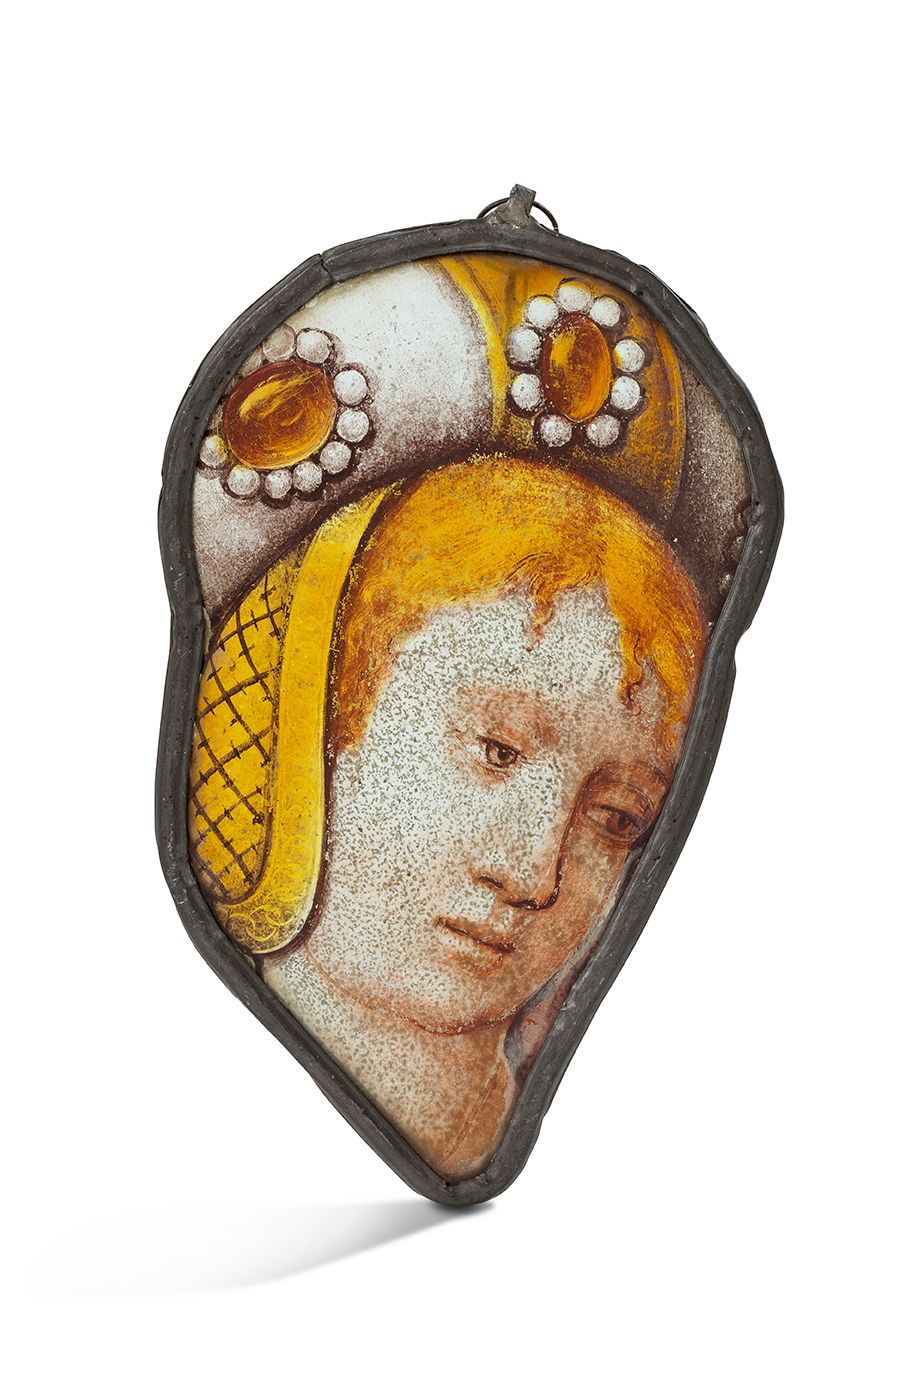 Null 彩绘玻璃 灰色和银黄色的彩绘玻璃窗碎片，表现一个戴着头巾的女人，上面装饰着凸圆形和珍珠，勃艮第的玛丽？
大约1480 / 1500
高度：21.5厘米&hellip;